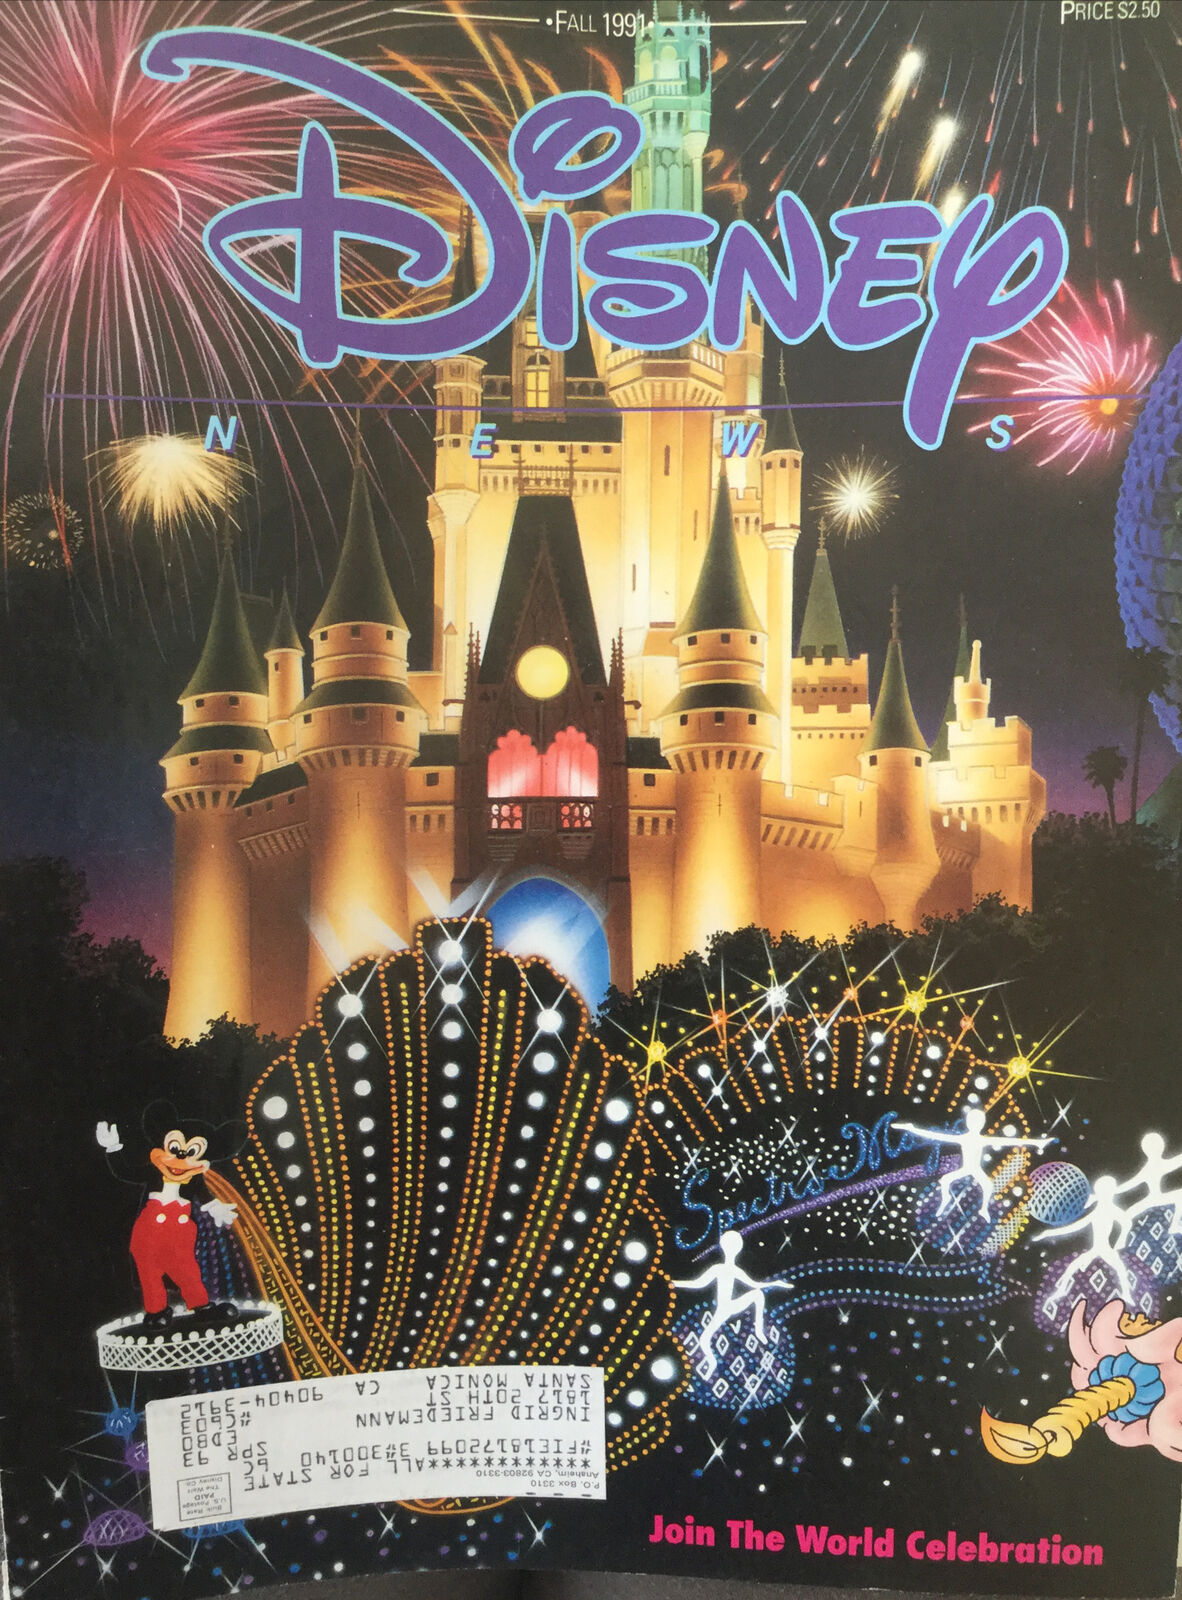 1991 Fall -Disney News \